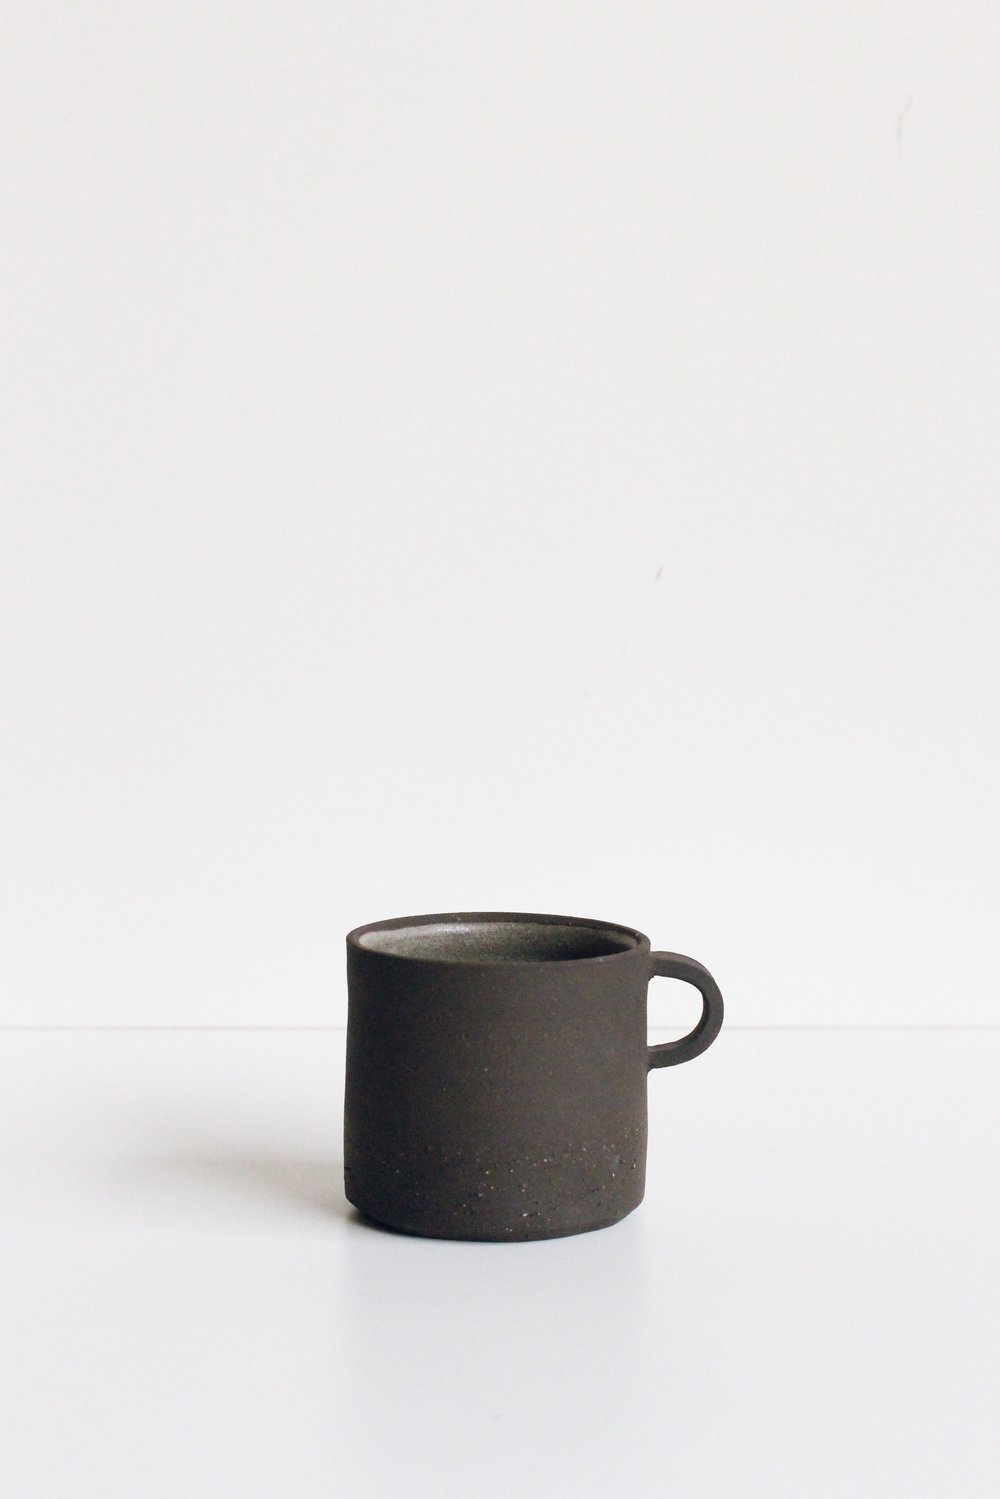 Image of Cup / Dark